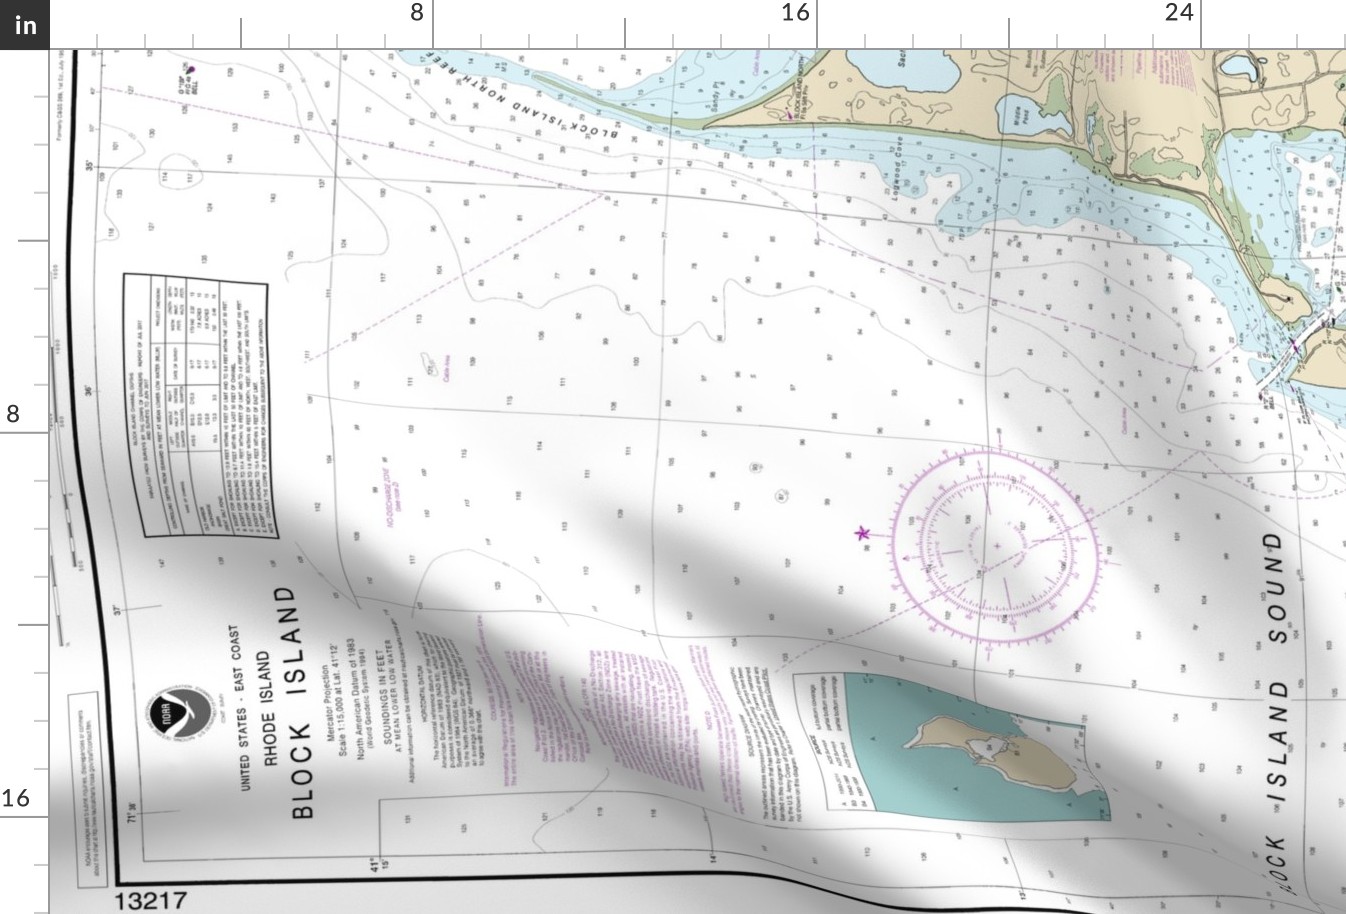 NOAA Block Island nautical chart #13217 - 36x52.6" (fits on a yard of the wider fabrics) 